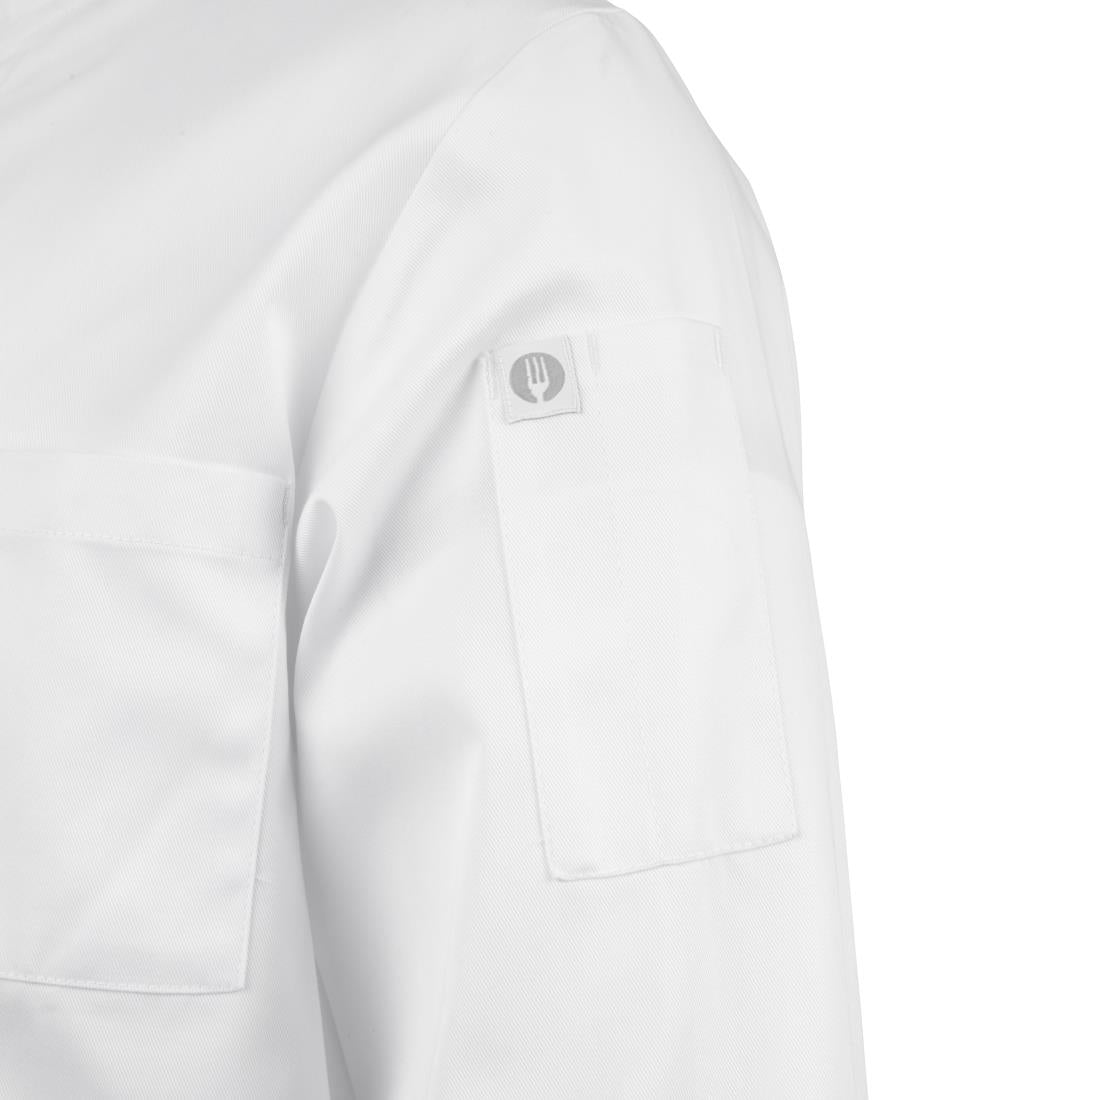 A371-S Chef Works Unisex Le Mans Chefs Jacket White S